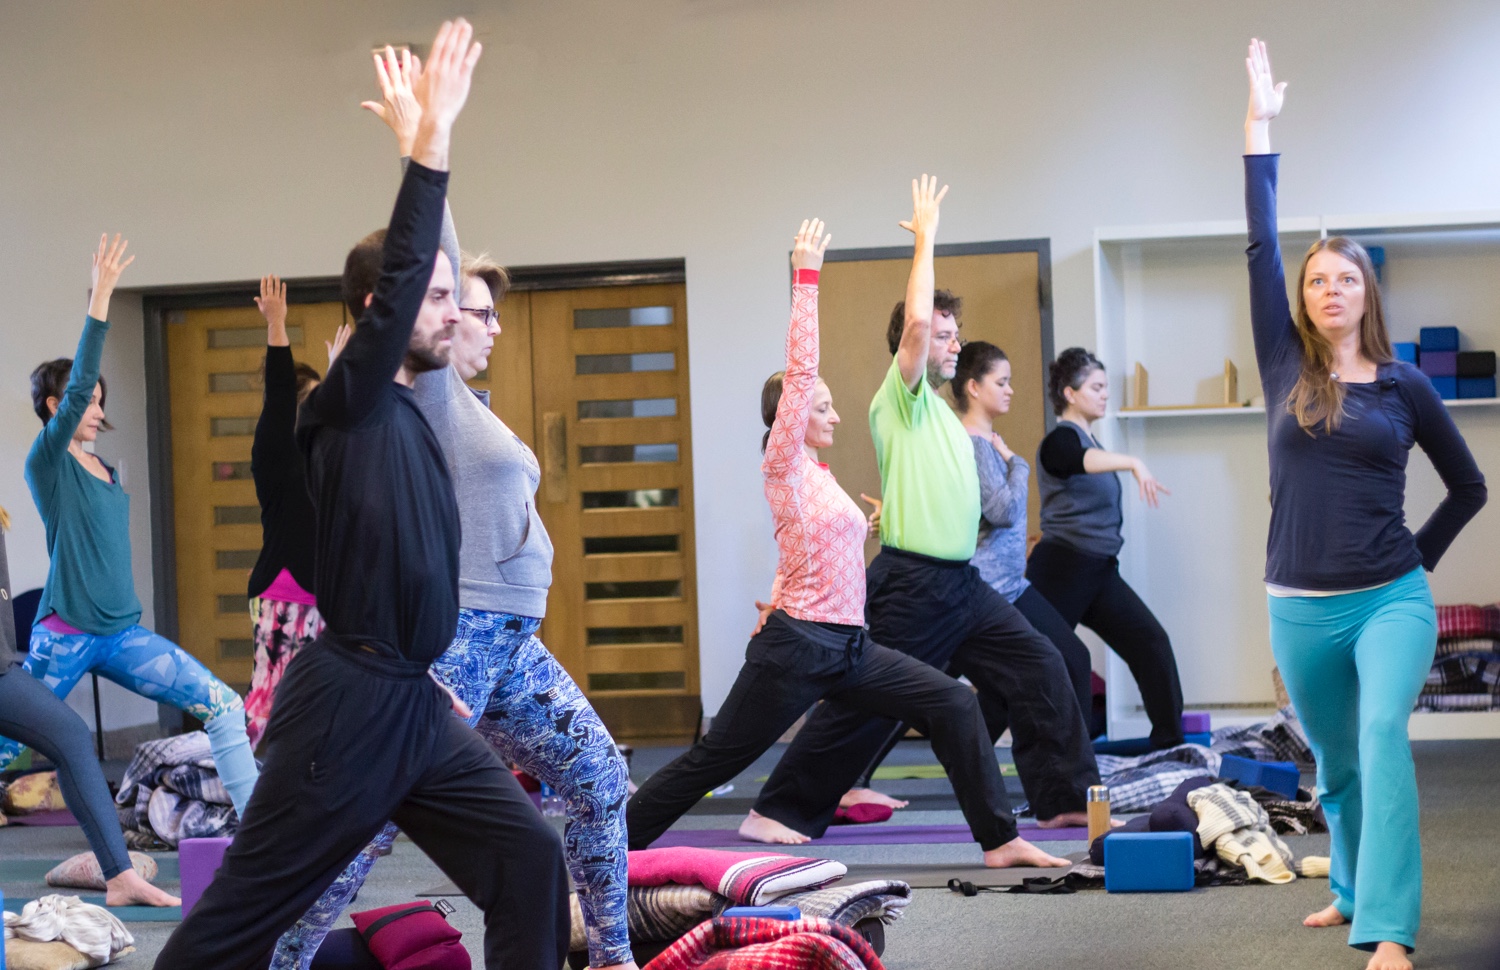 yogi living practice - Himalayan Institute